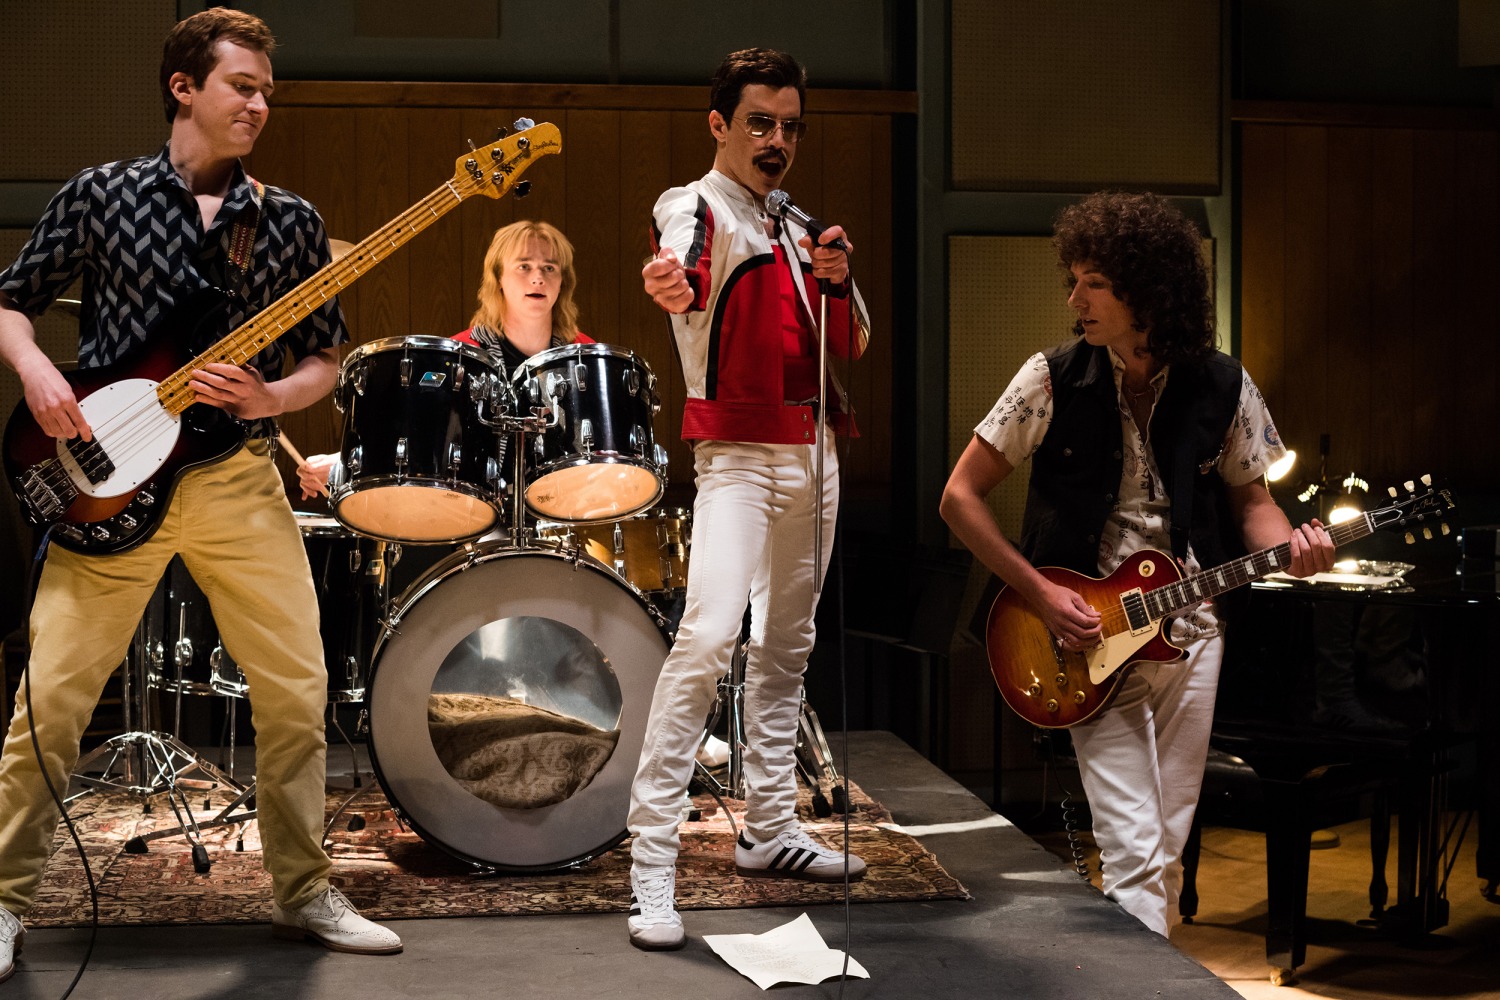 Queen biopic 'Bohemian Rhapsody' has no idea what made Freddie Mercury so  special